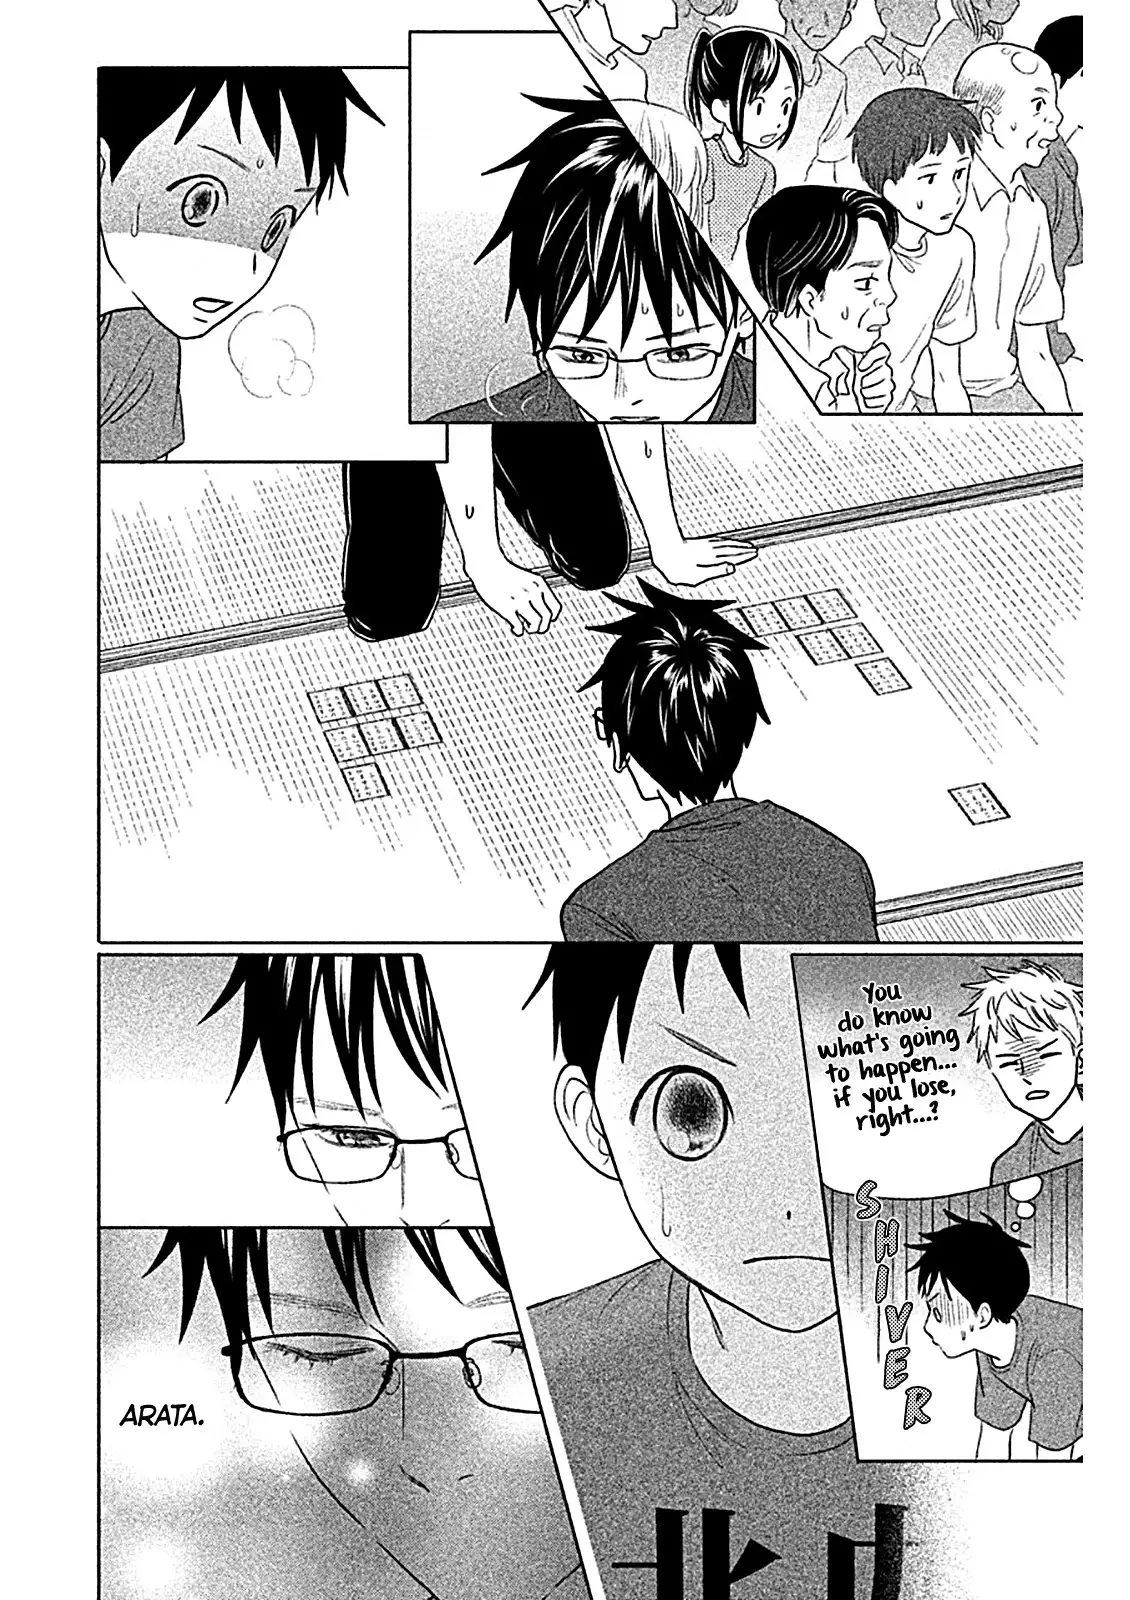 Chihayafuru: Middle School Arc - 10 page 19